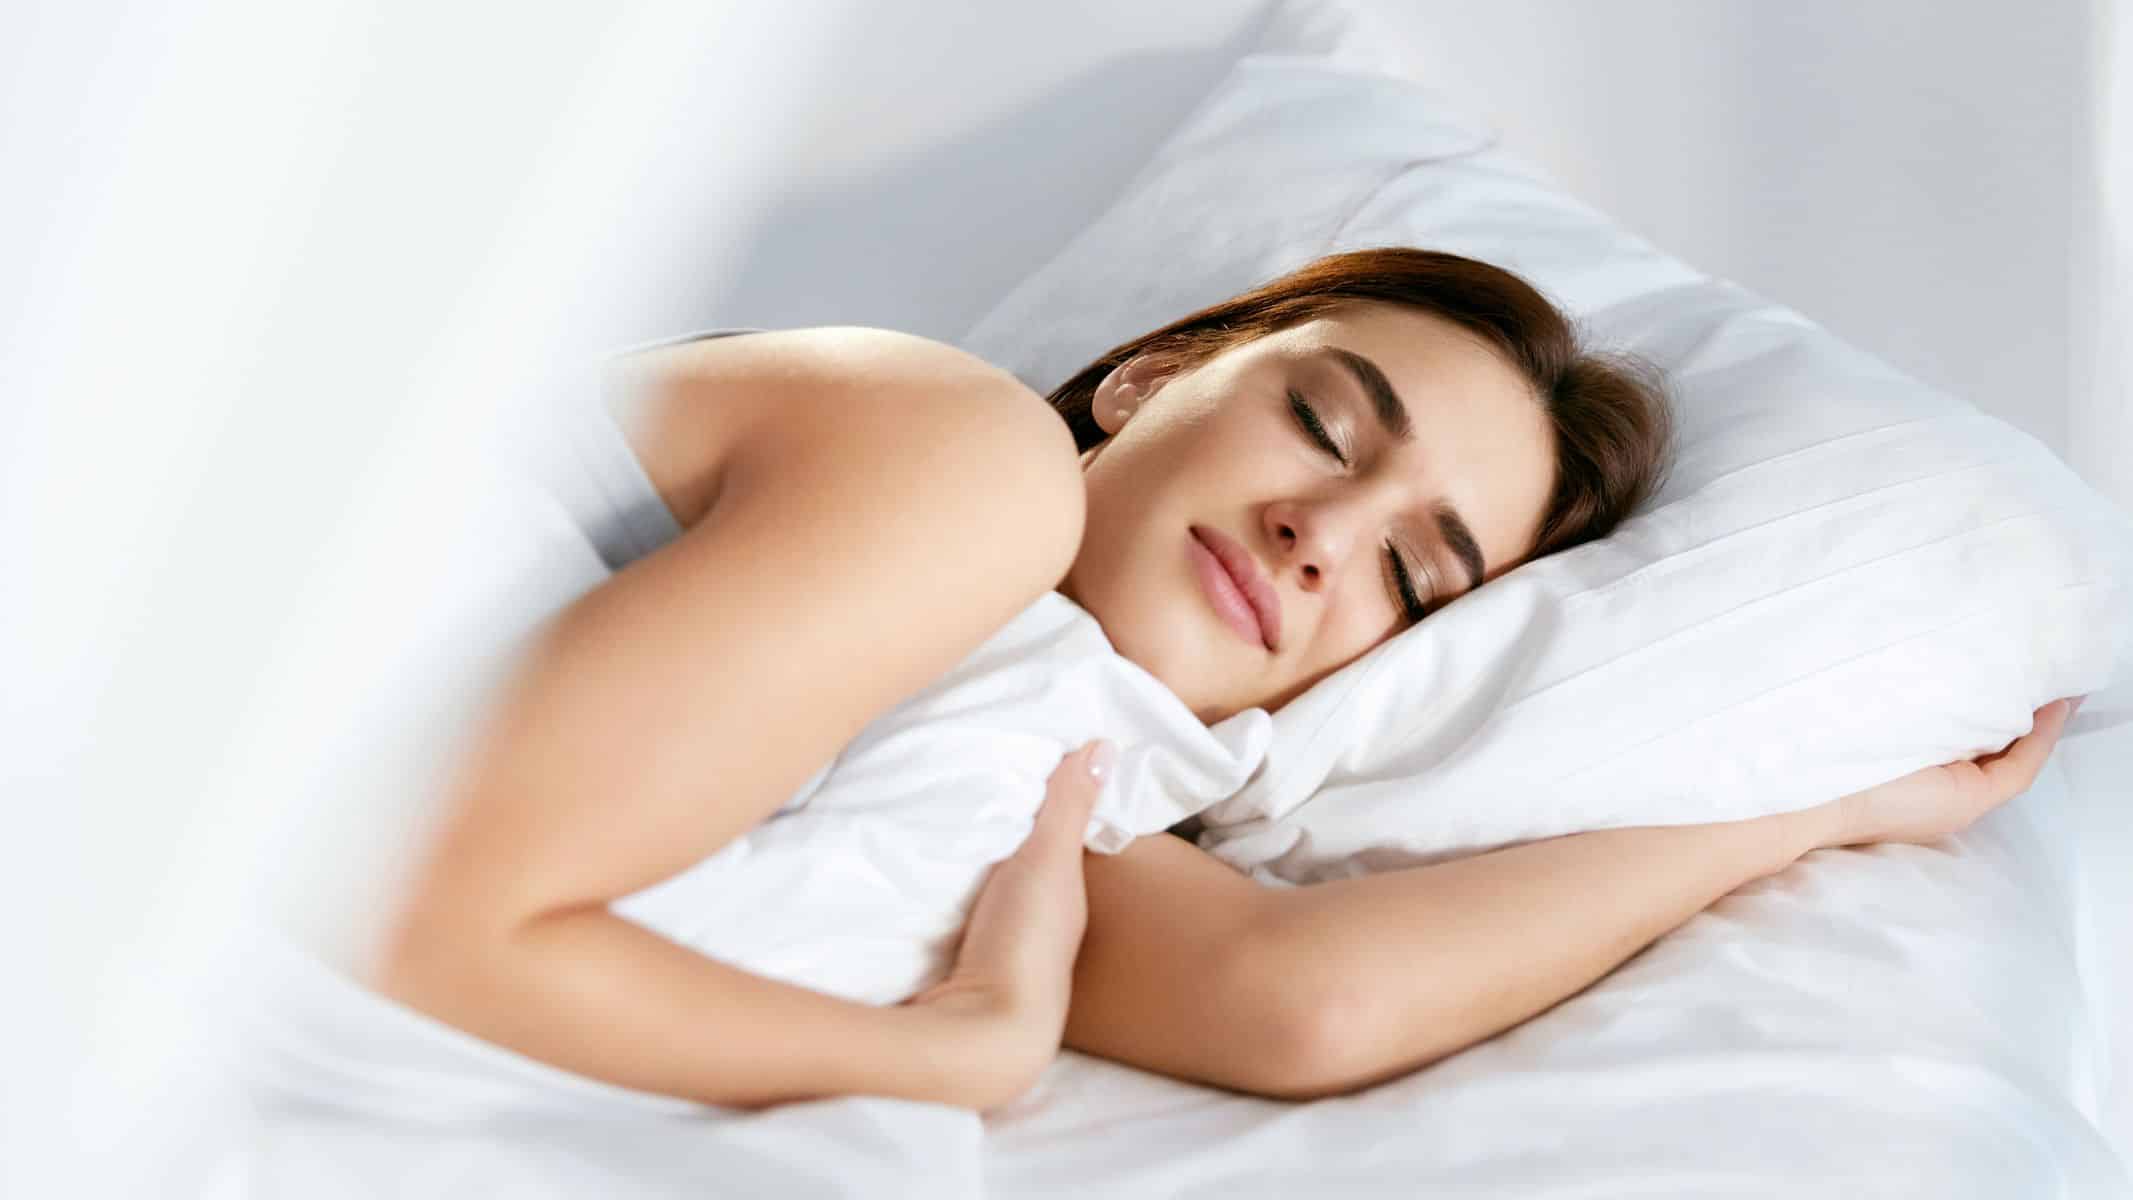 How to Get a Good Nights Sleep